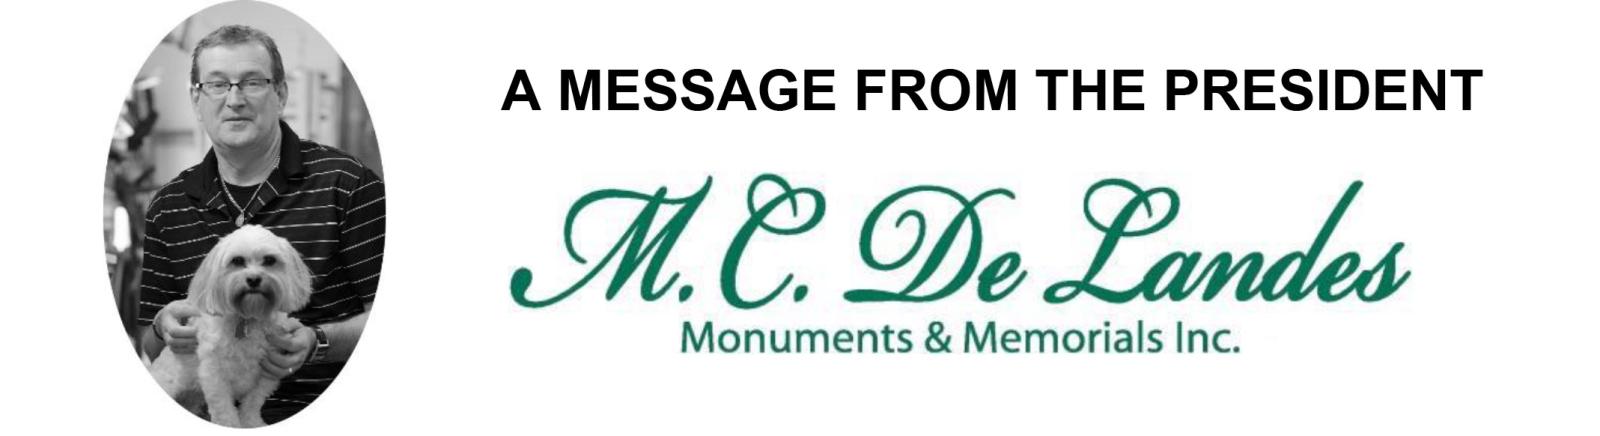 A message from the president - M.C. De Landes Monuments & Memorials Inc.